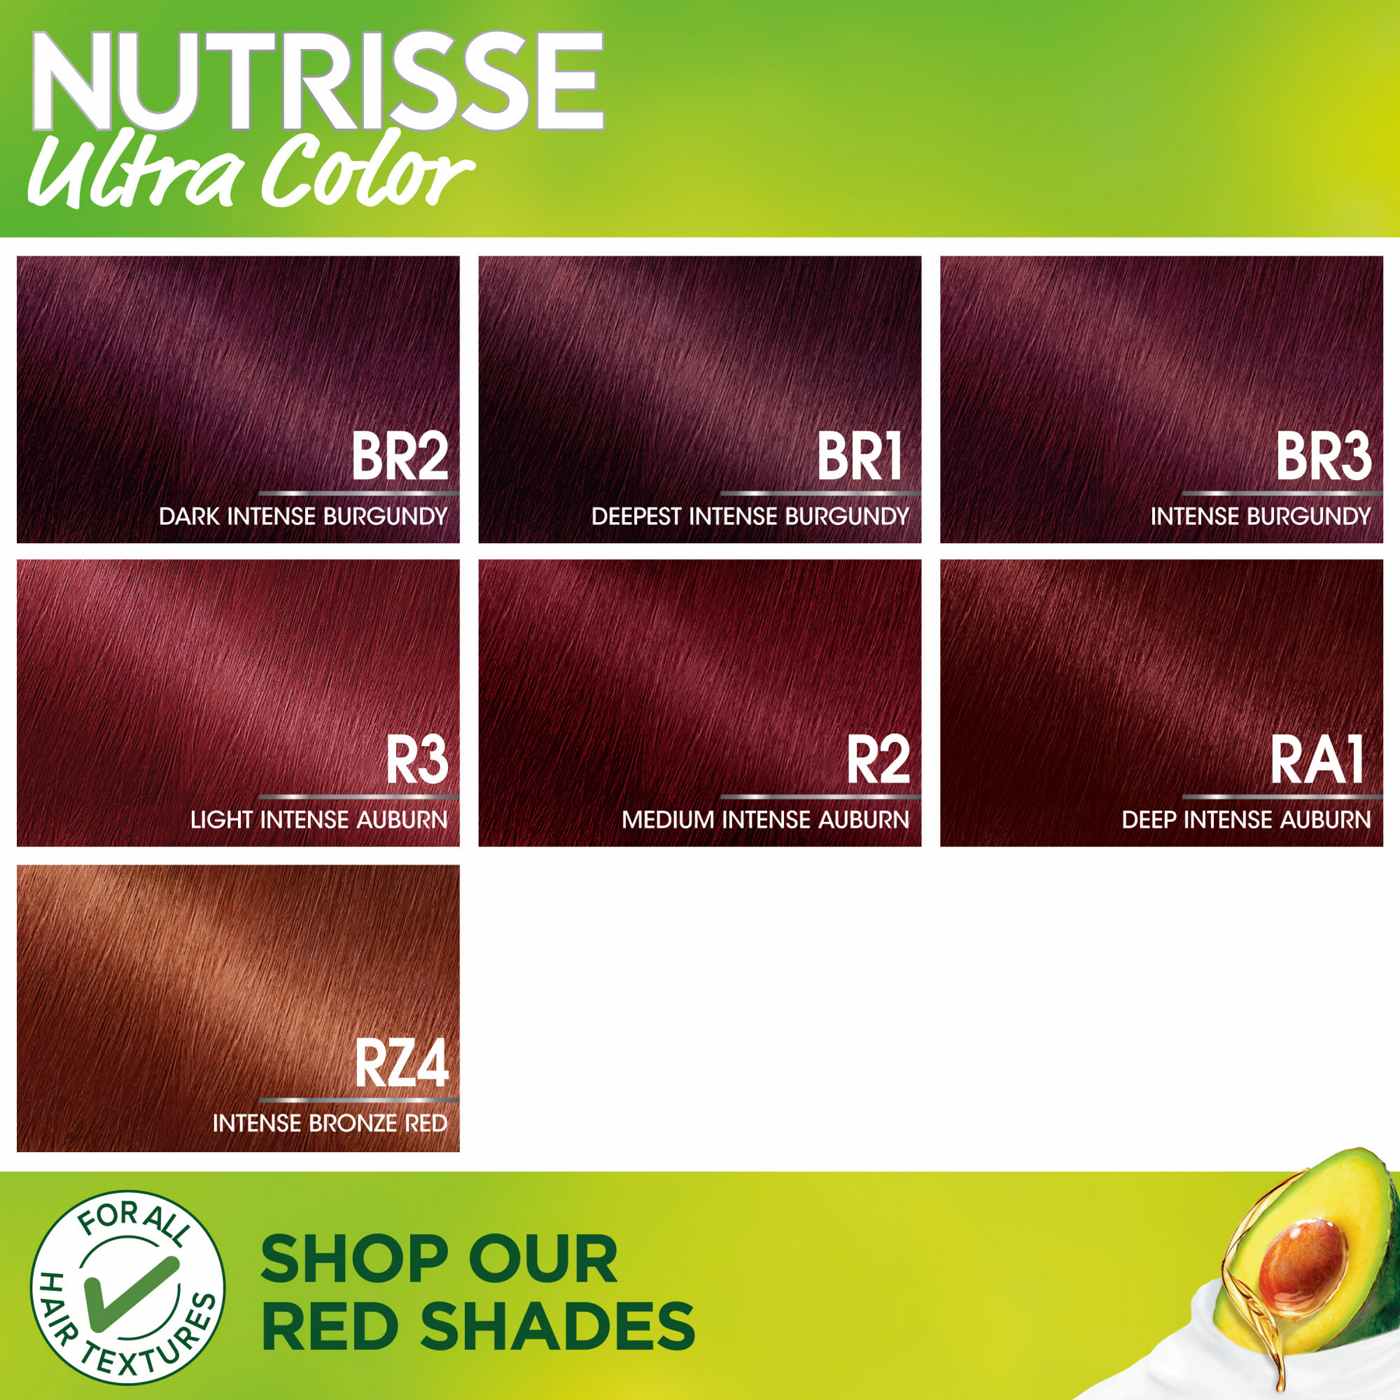 Garnier Nutrisse Ultra Color Nourishing Bold Permanent Hair Color Creme R2 Medium Intense Auburn; image 5 of 9